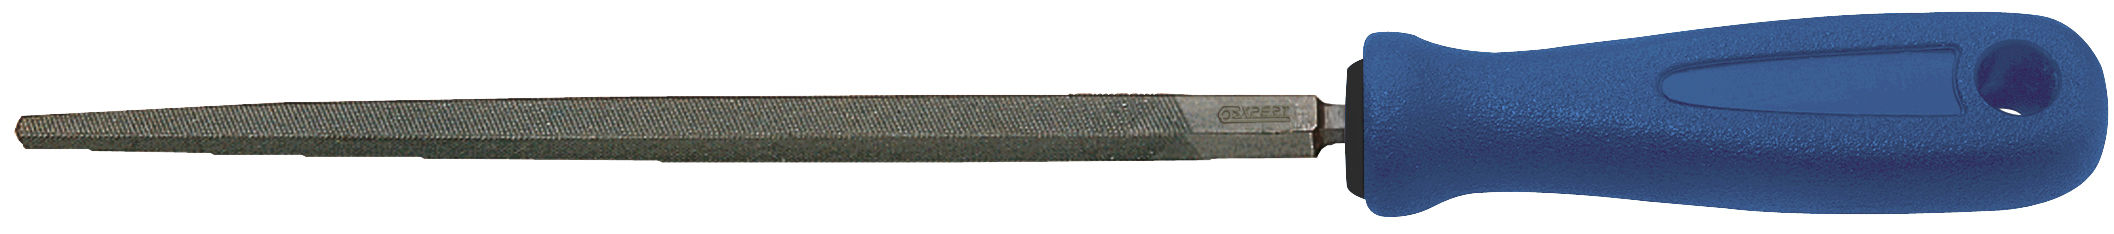 1.E020609 Vierkantvijl halfzoet - 200mm